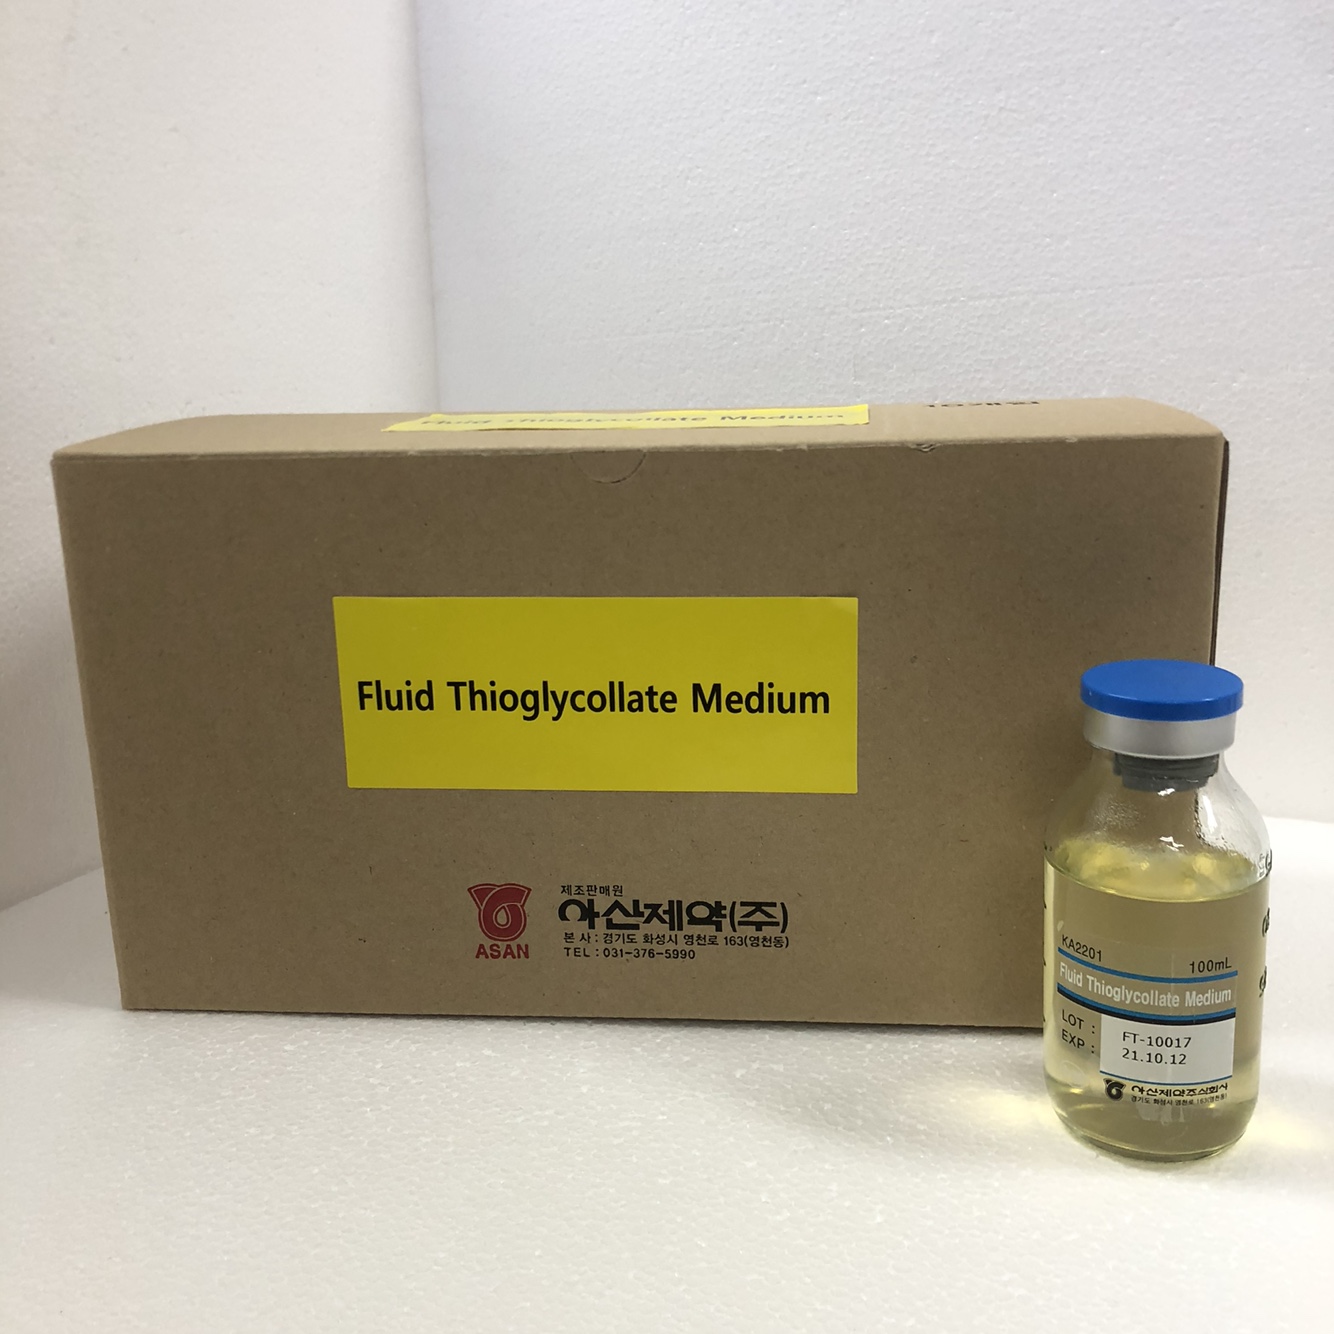 Fluid Thioglycollate Medium